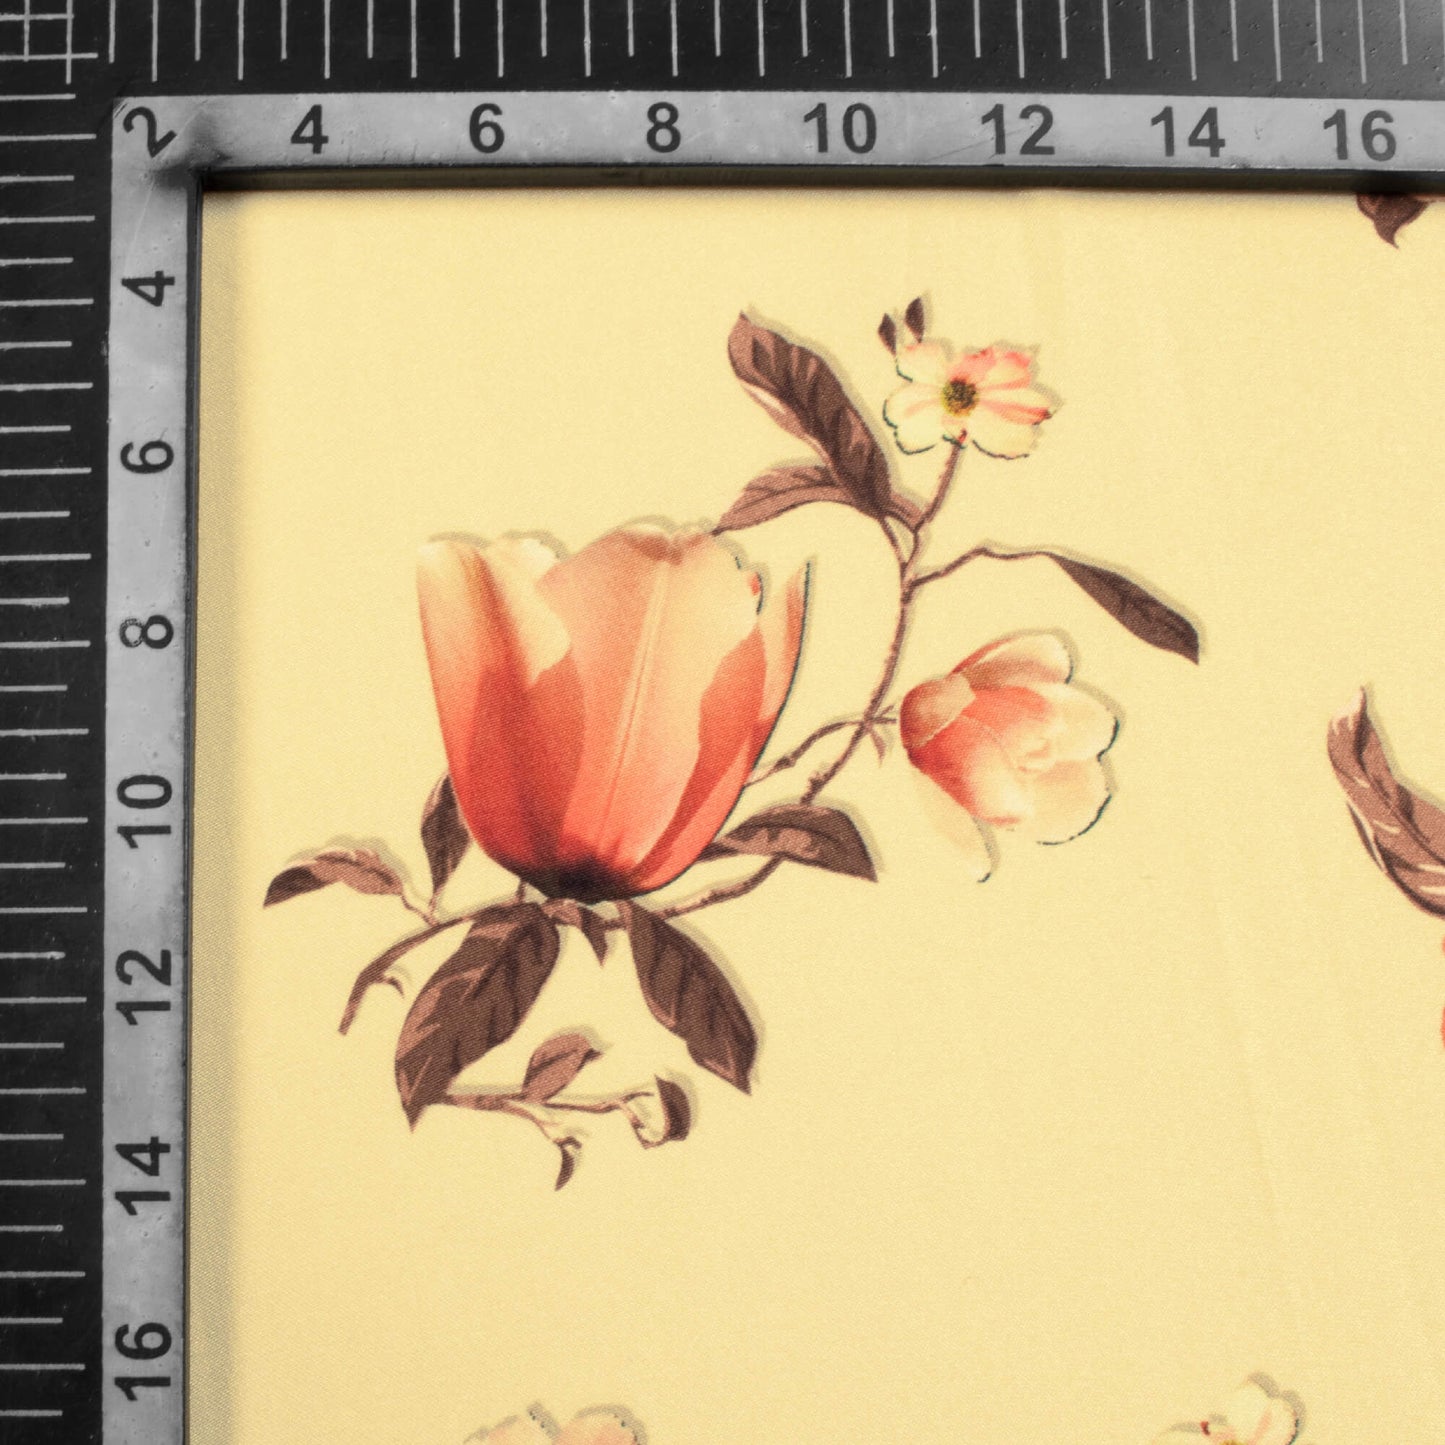 Mellow Yellow And Salmon Orange Floral Pattern Digital Print Premium Lush Satin Fabric